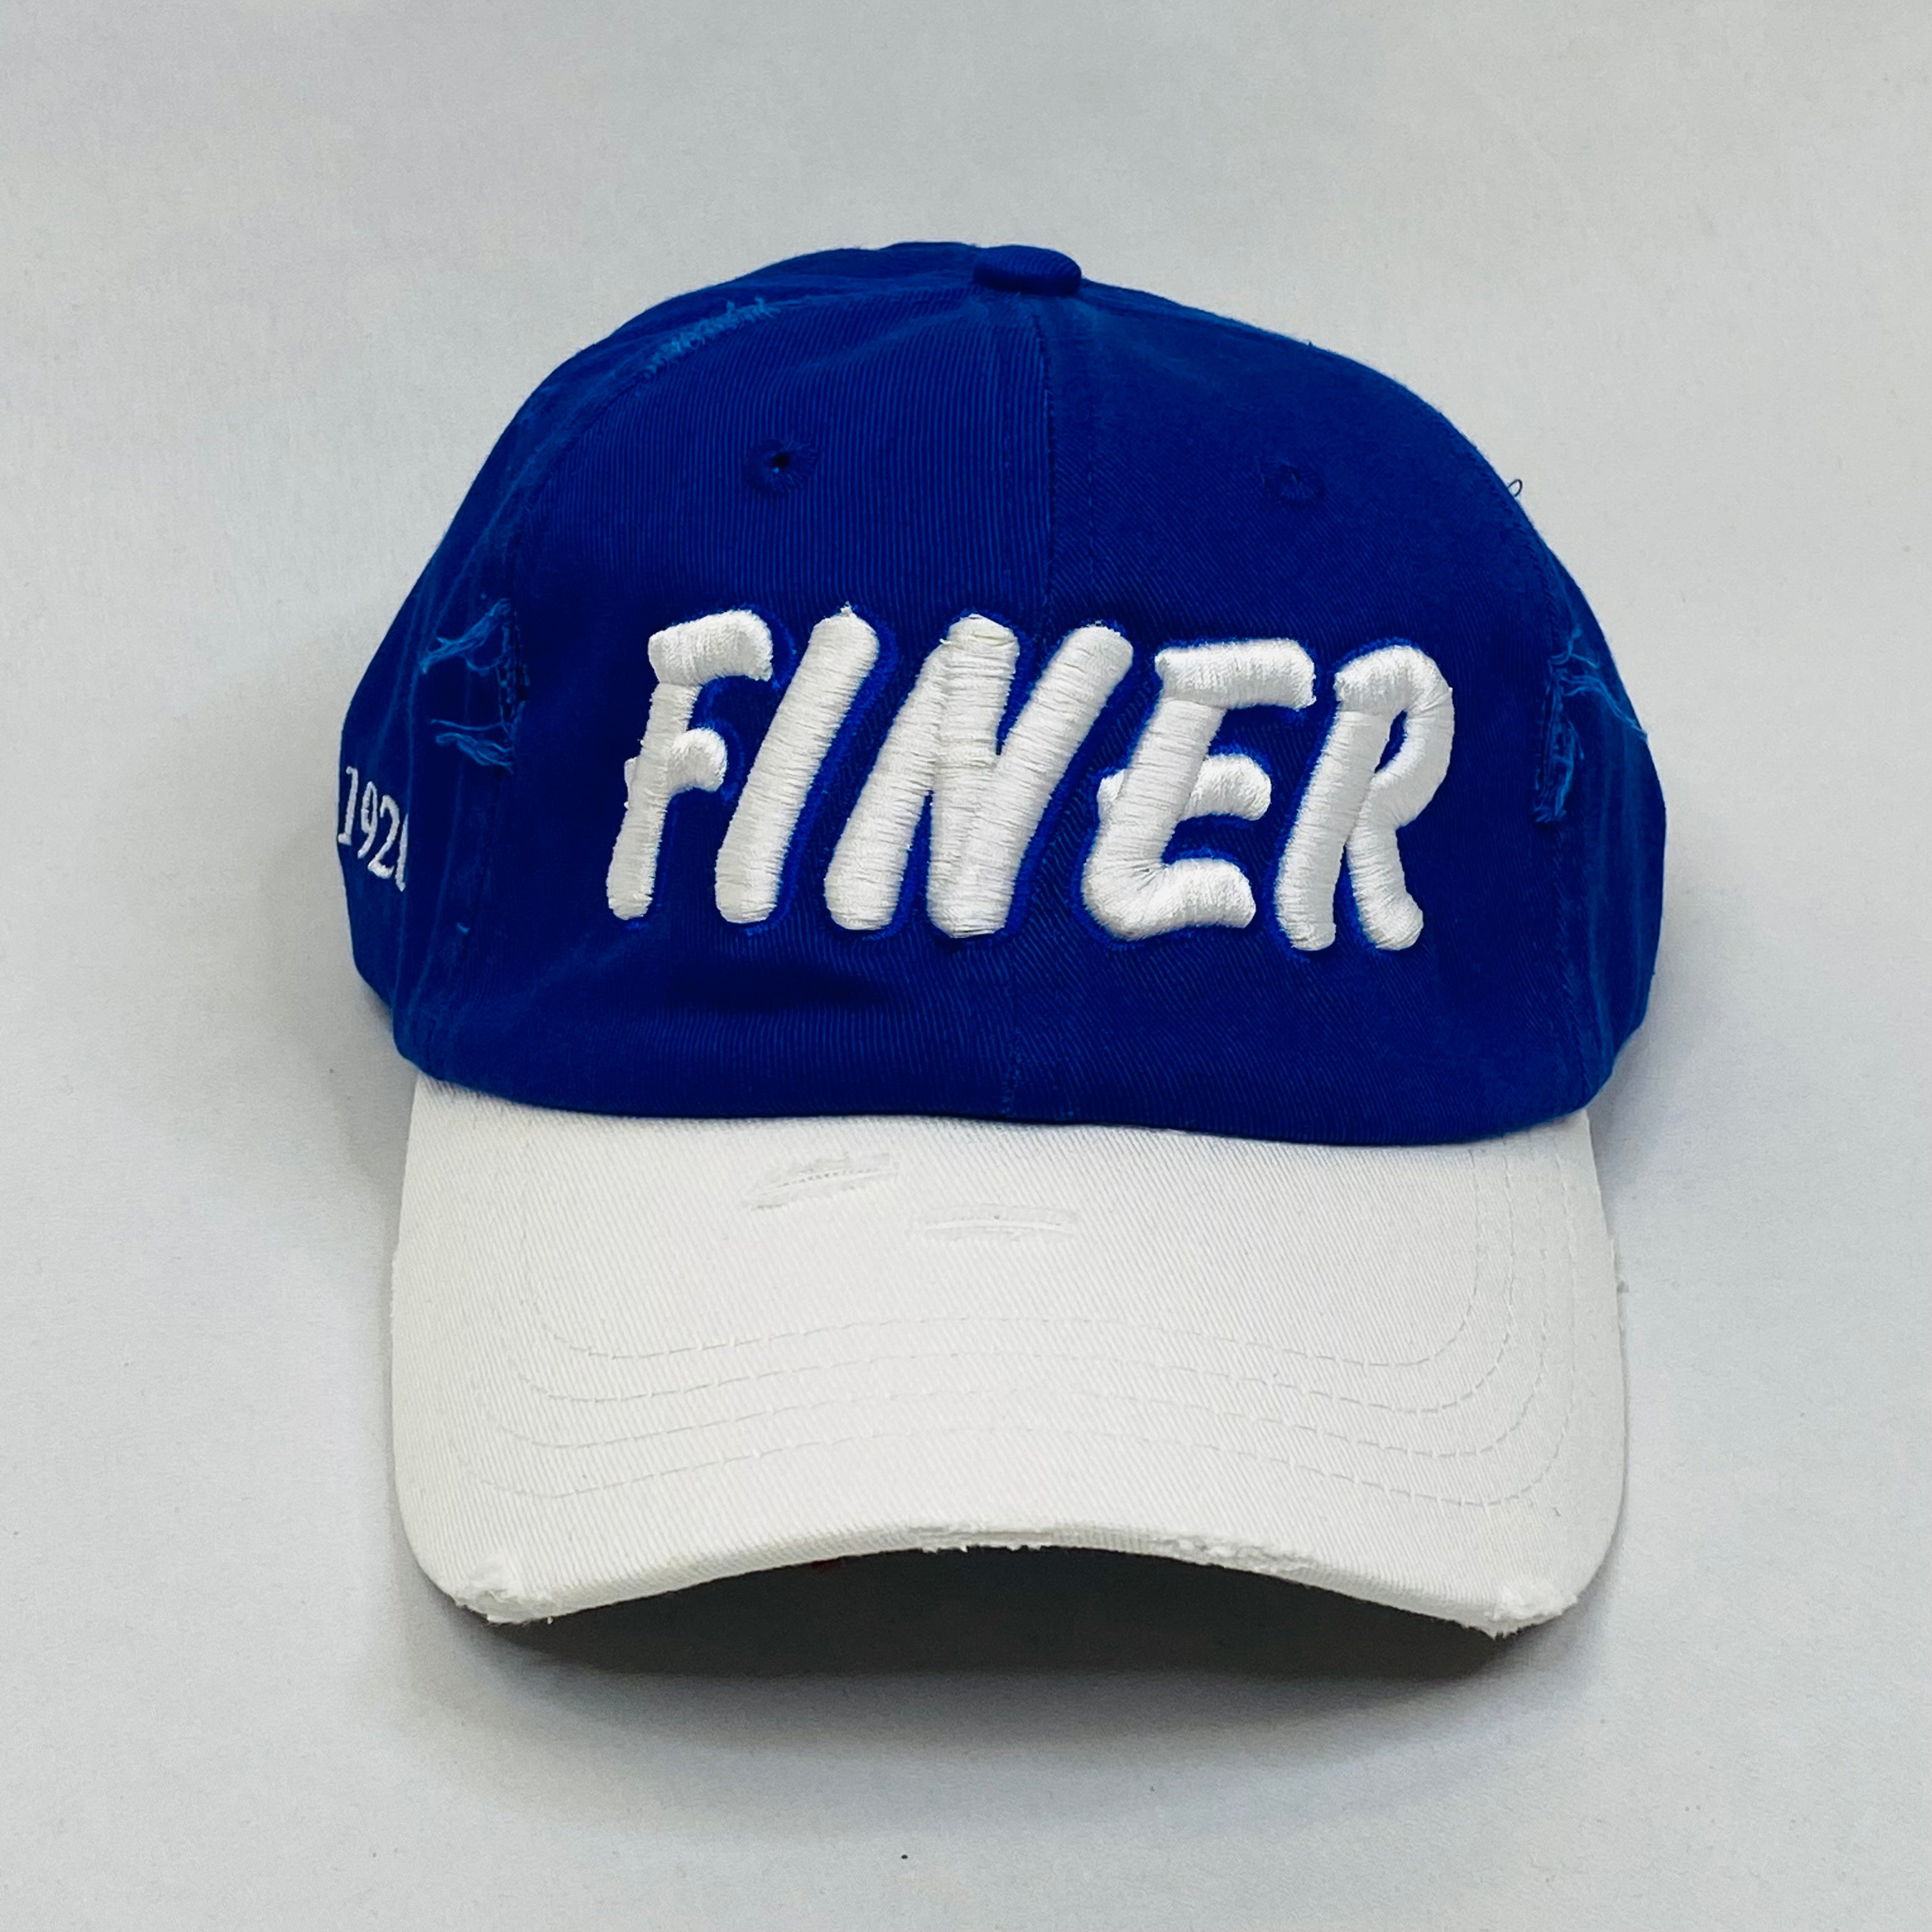 “FINER” Zeta Phi Beta Blue & White Distressed Hat